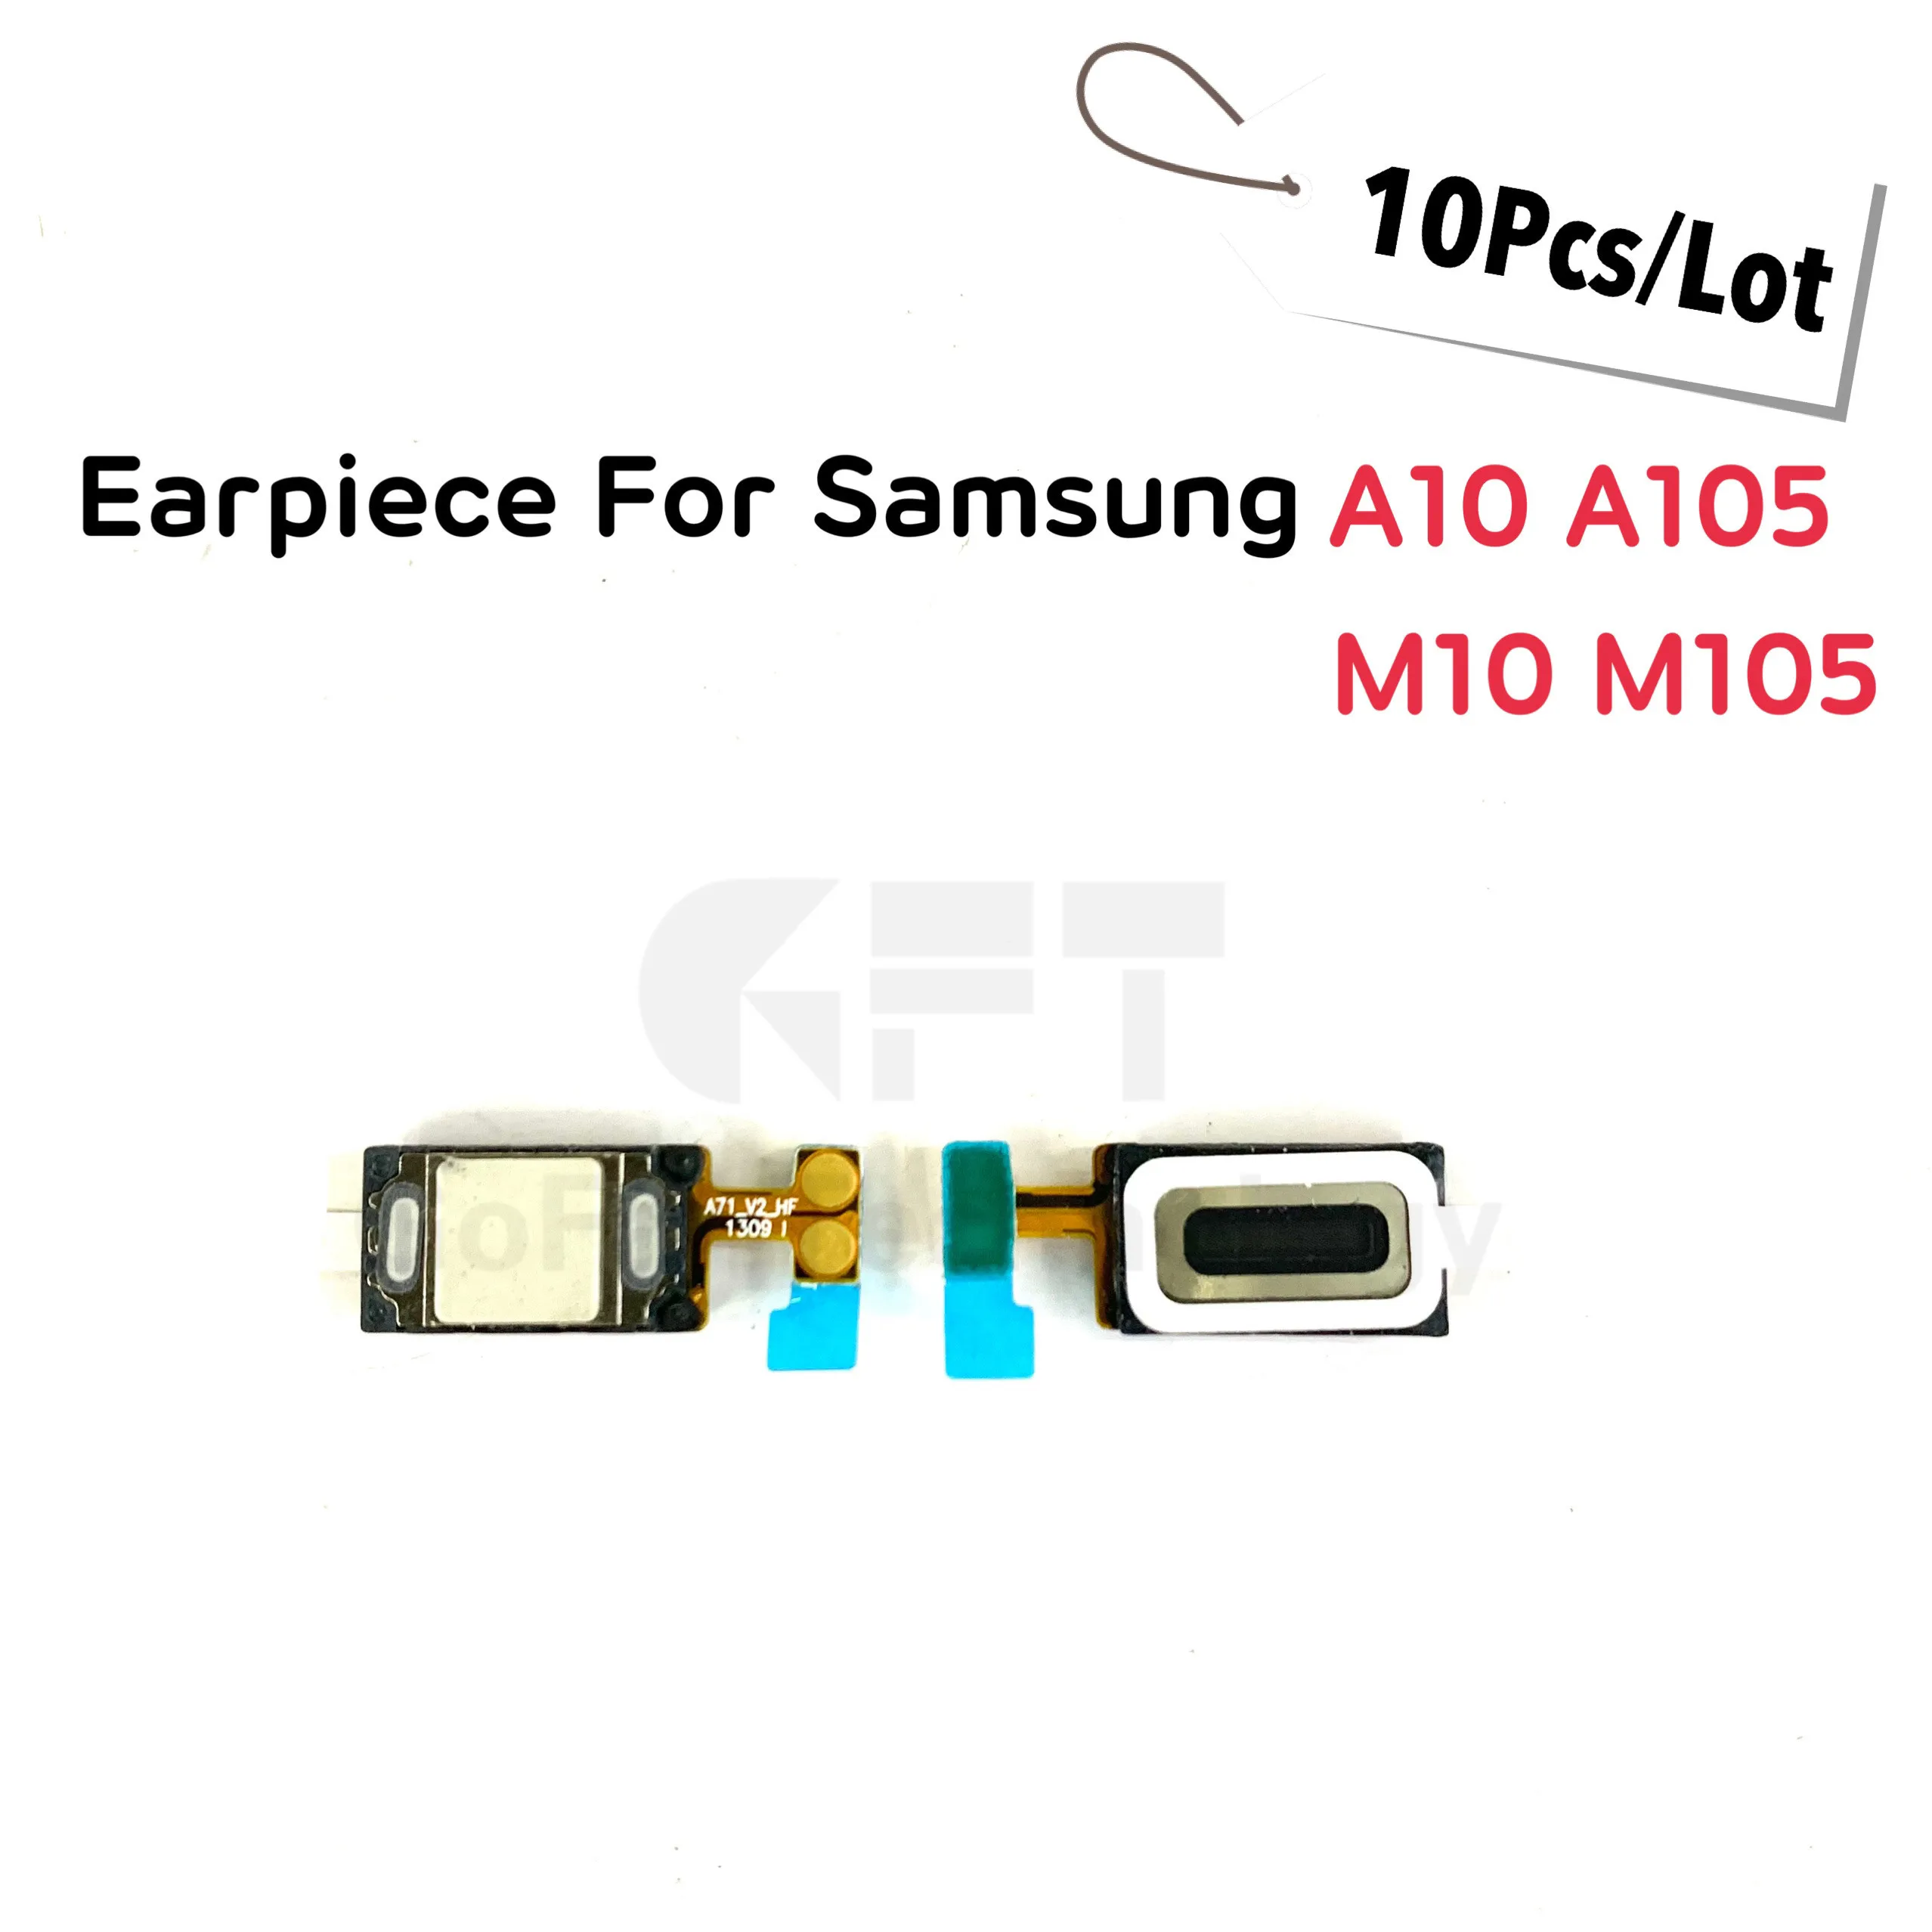 

10Pcs For Samsung Galaxy A10 SM-A105/M10 SM-M105 Earpiece Ear Speaker